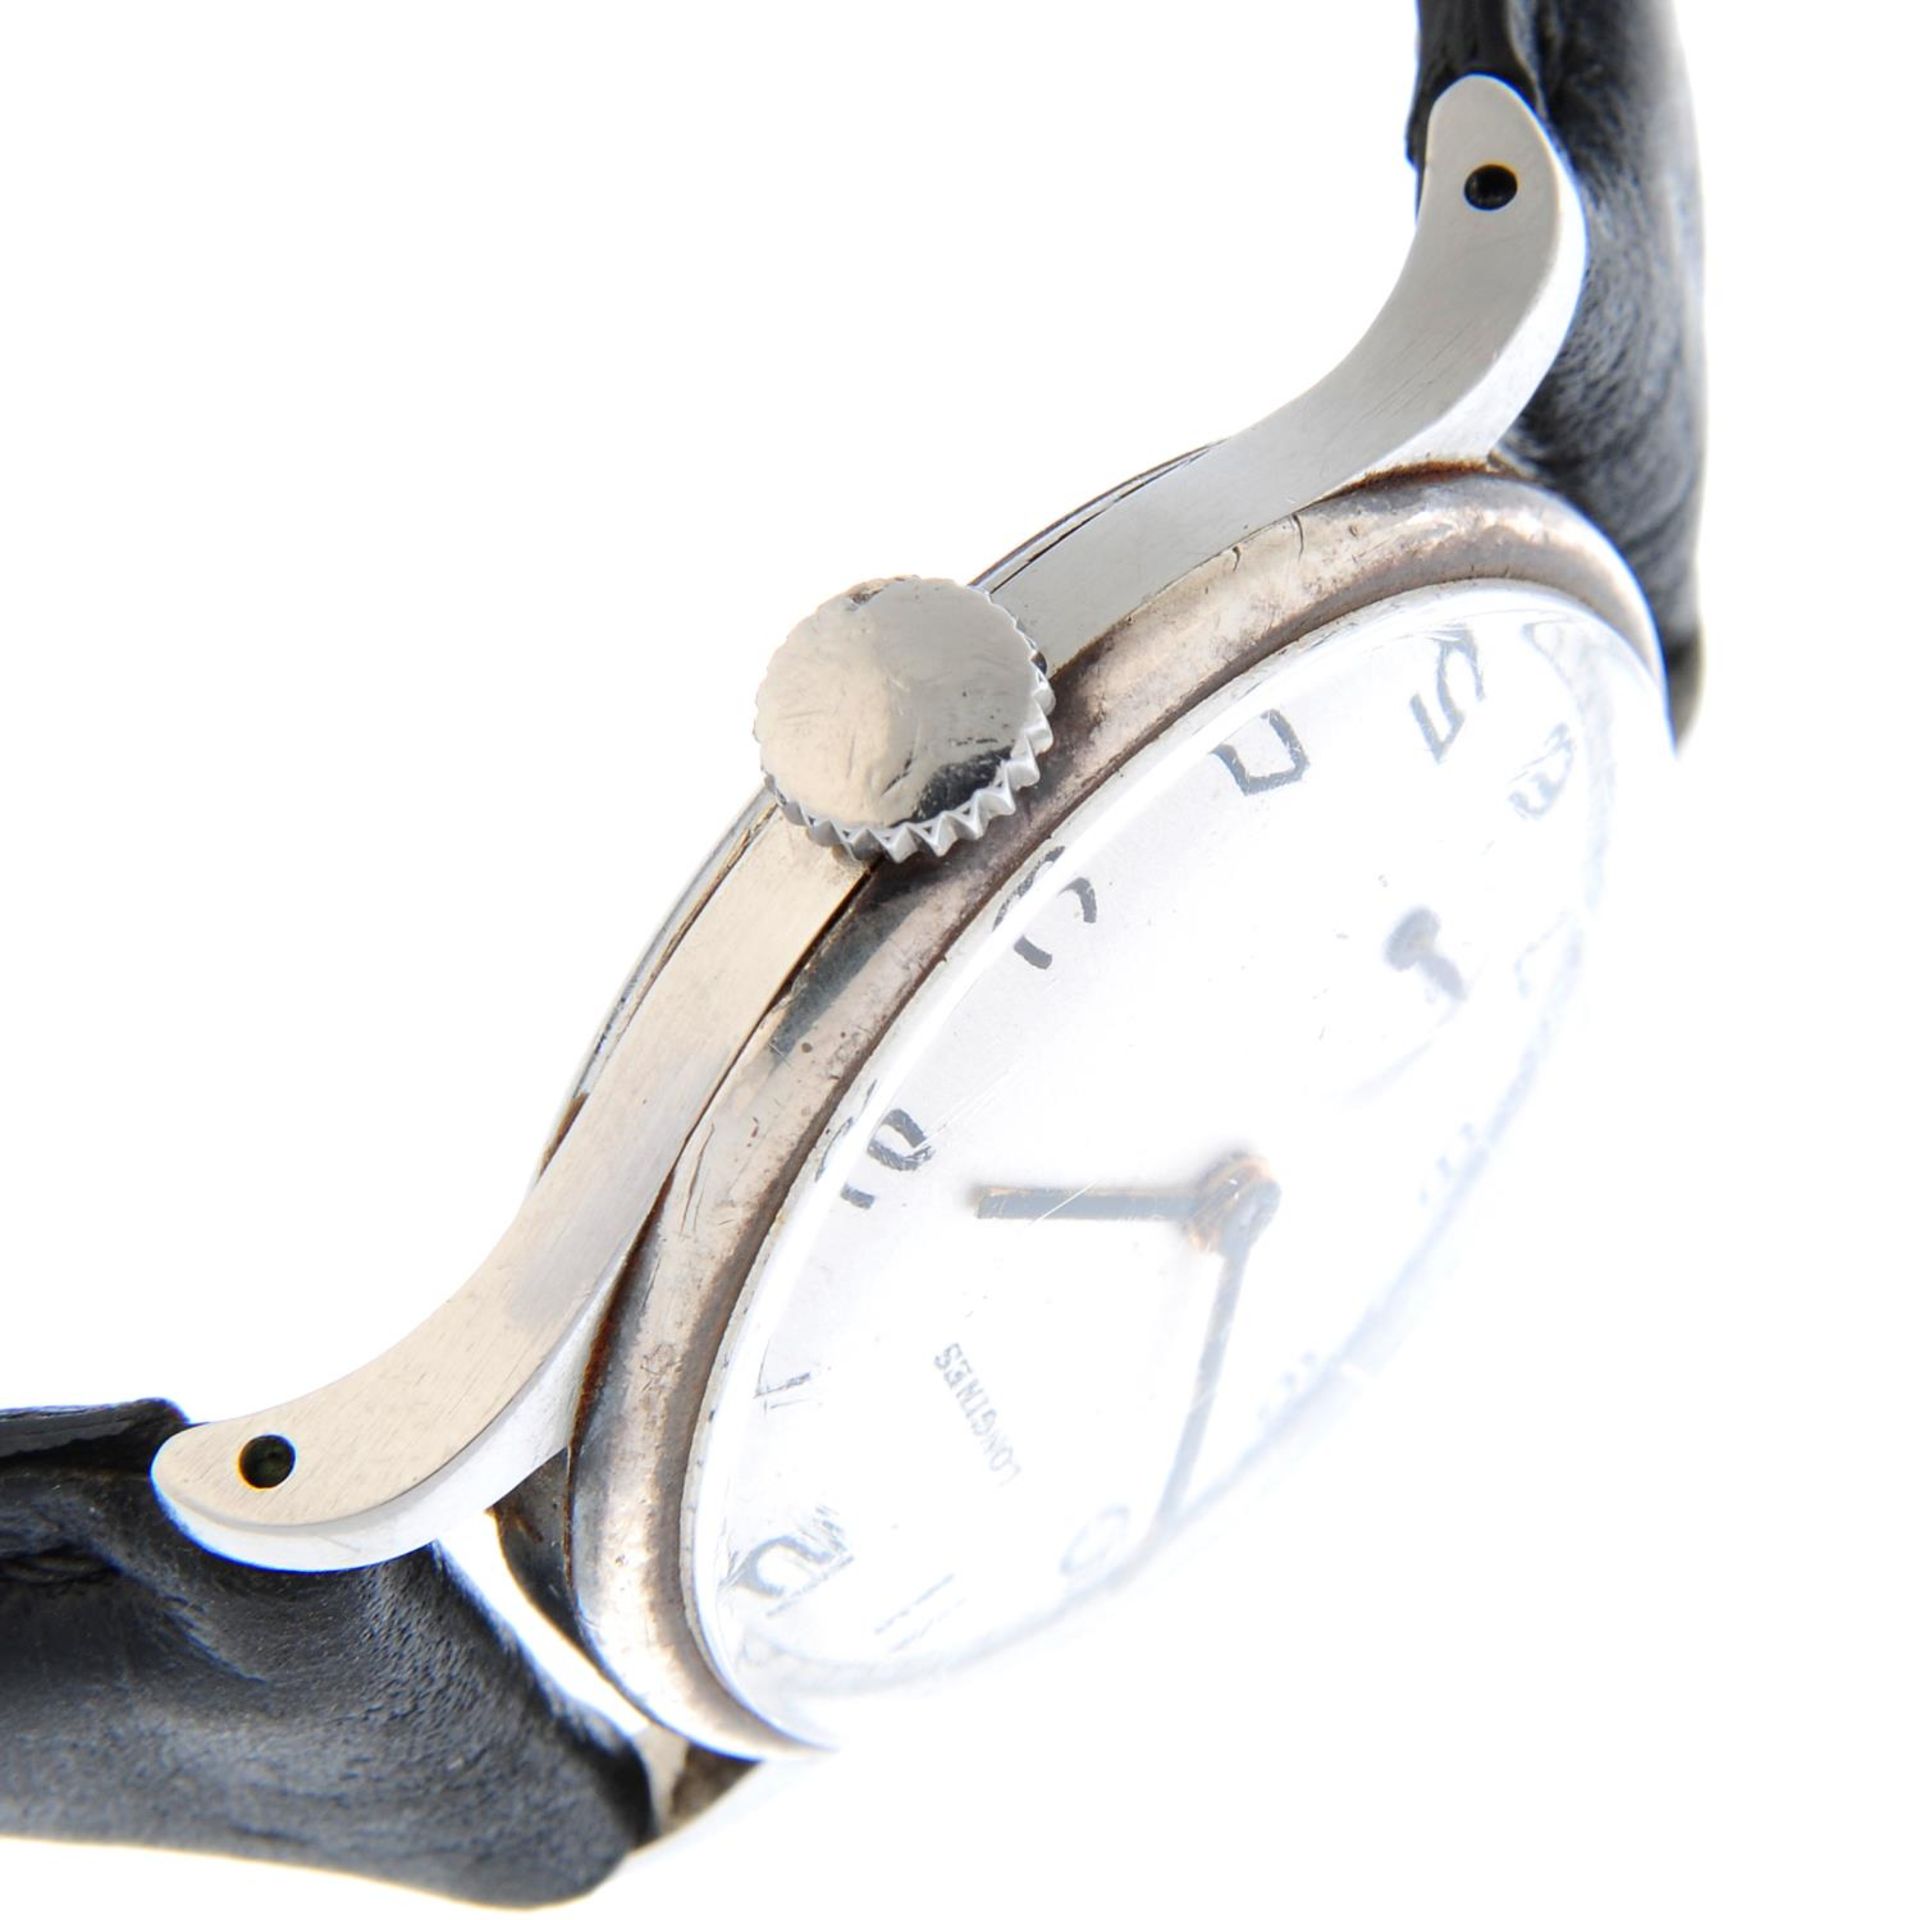 LONGINES - a wrist watch. - Image 3 of 4